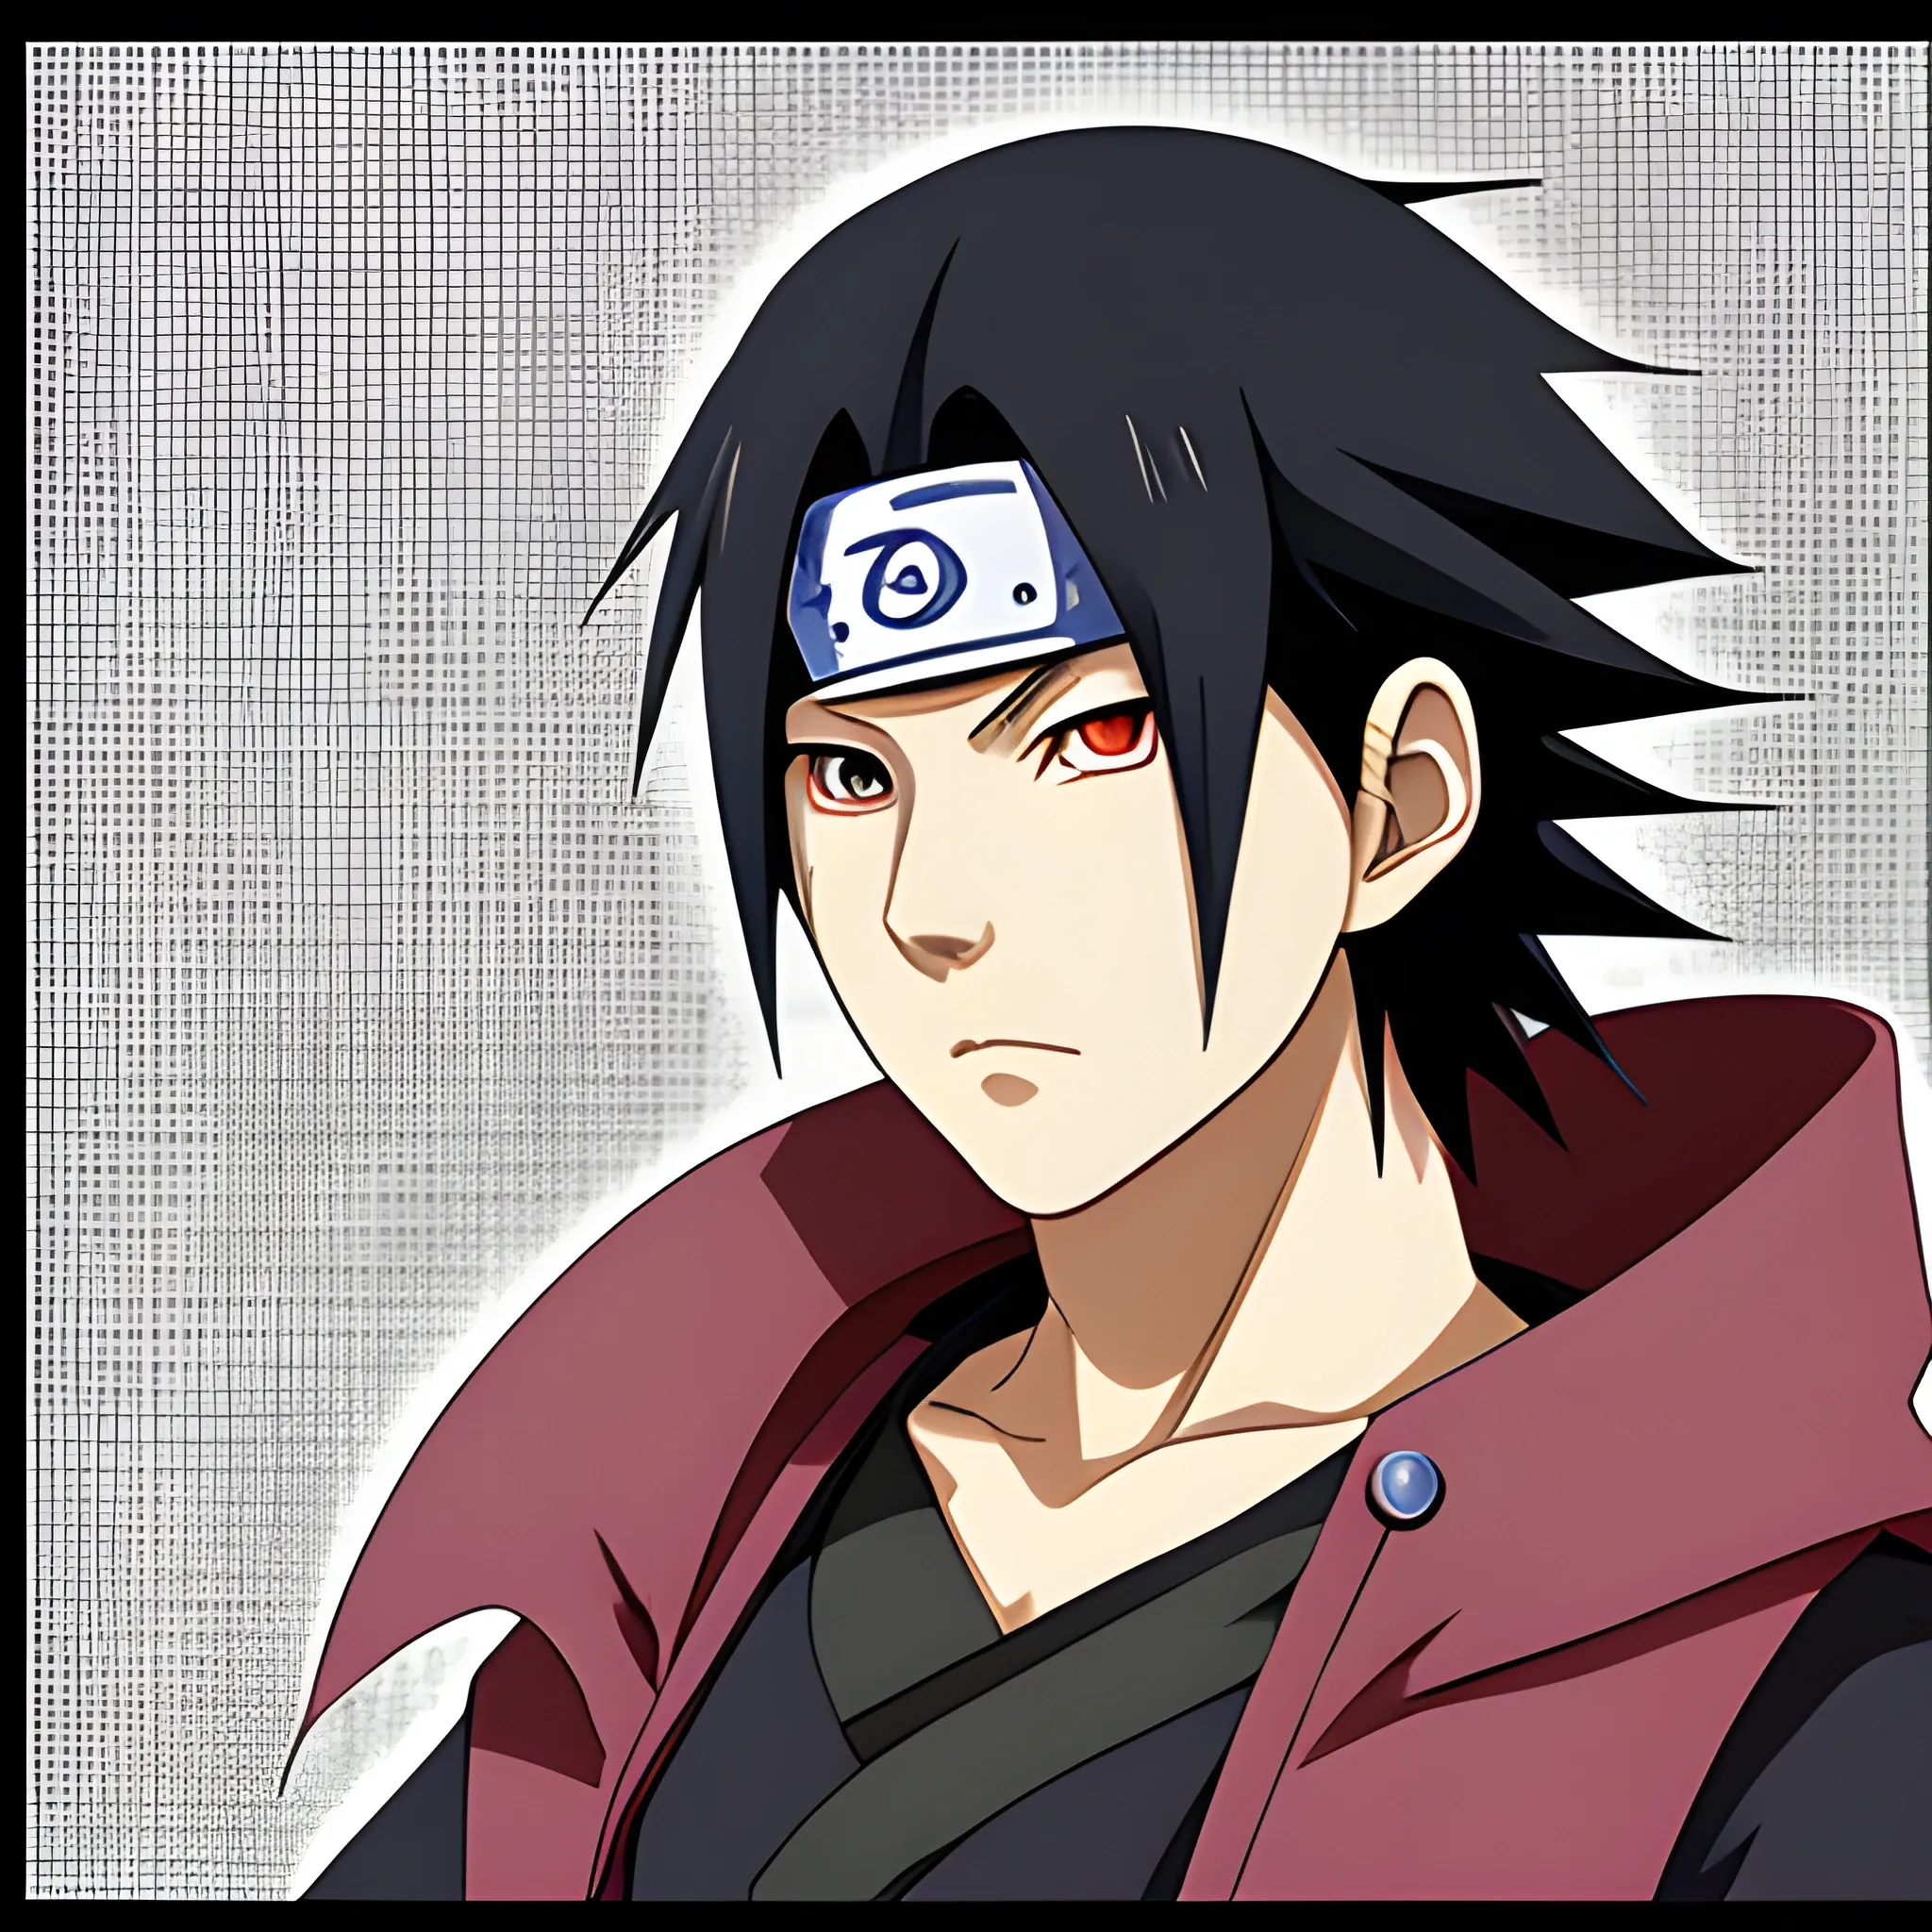 Sasuke Uchiha from Naruto, early 20s, anime style, highly detailed, award-winning